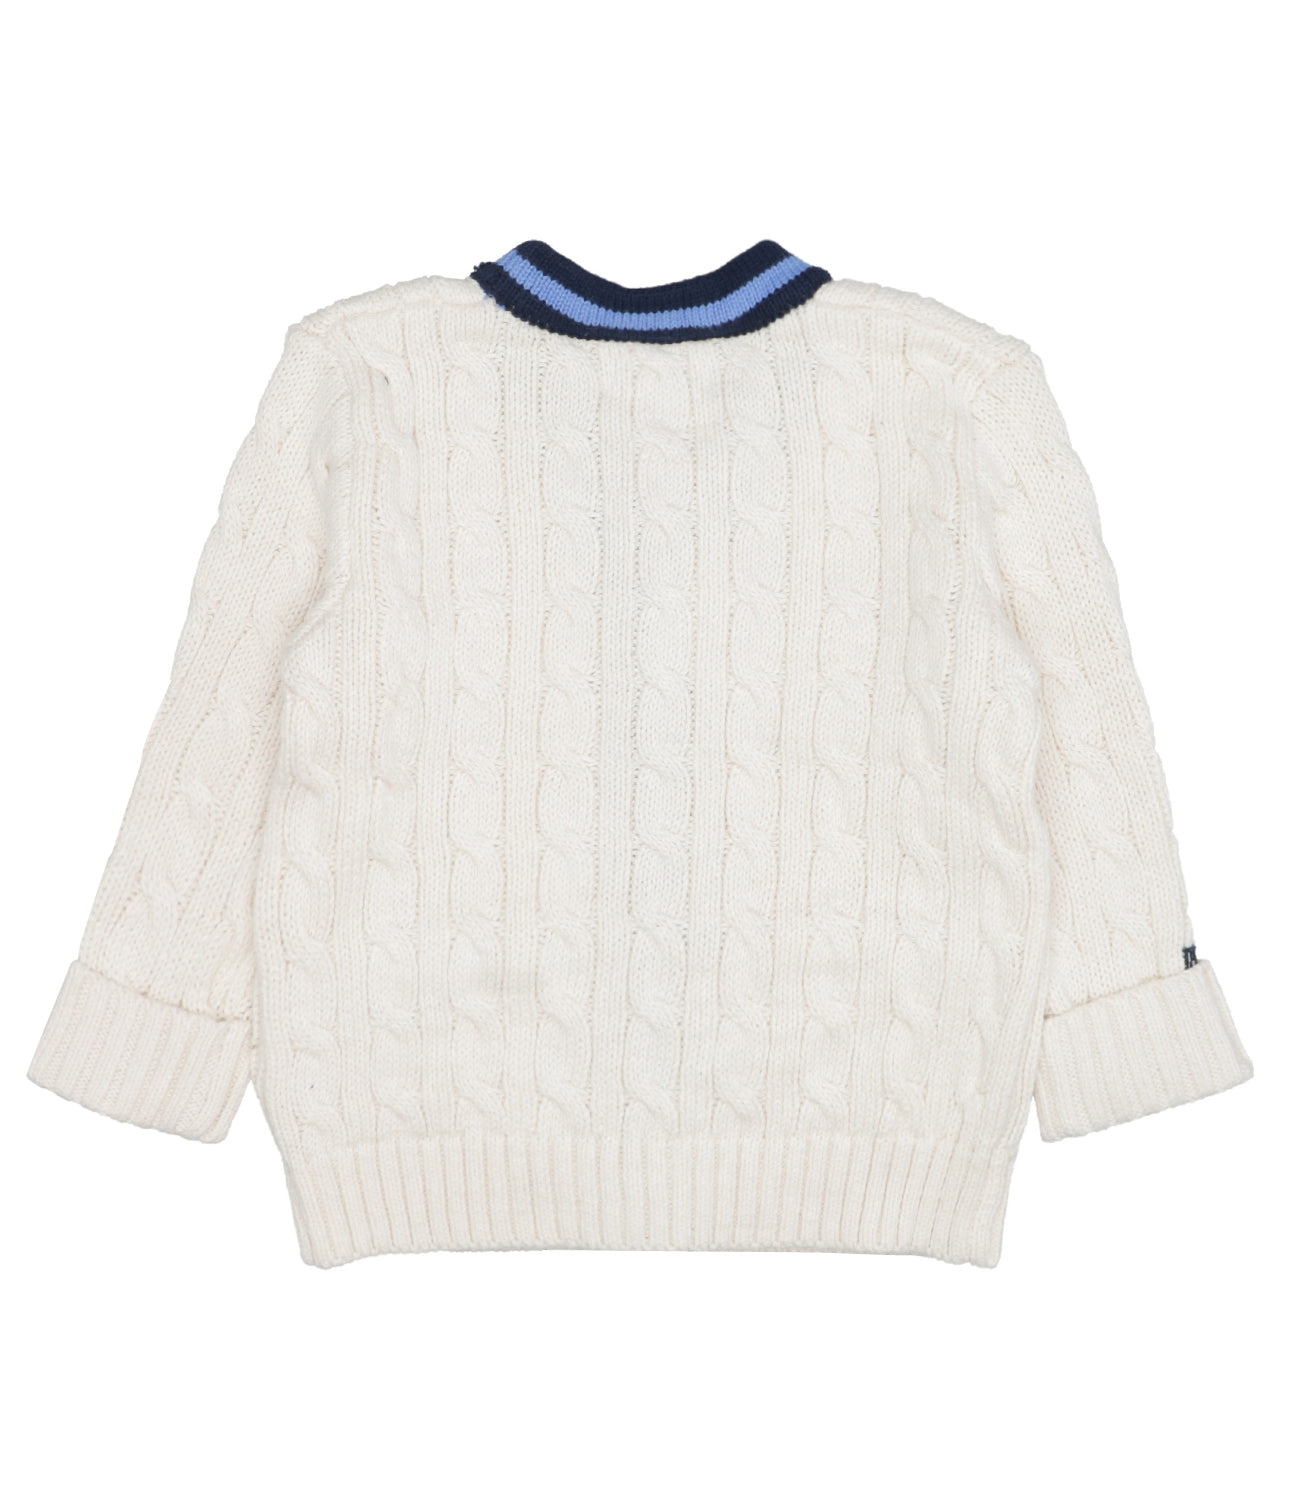 Ralph Lauren Childrenswear | Cream and Blue Cardigan